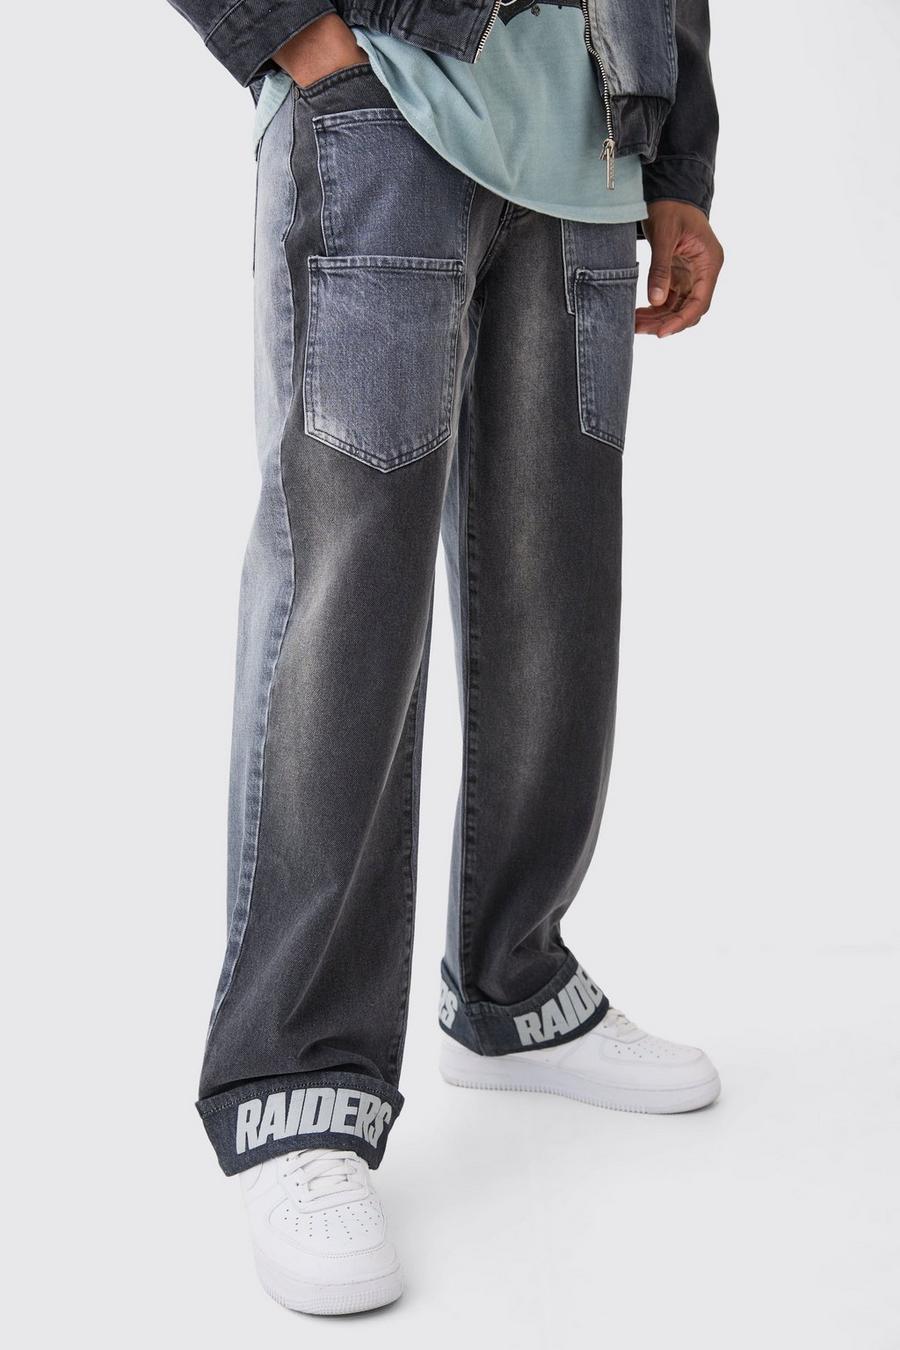 Charcoal gris Nfl Raiders Baggy Rigid Multi Pocket Spliced Jeans